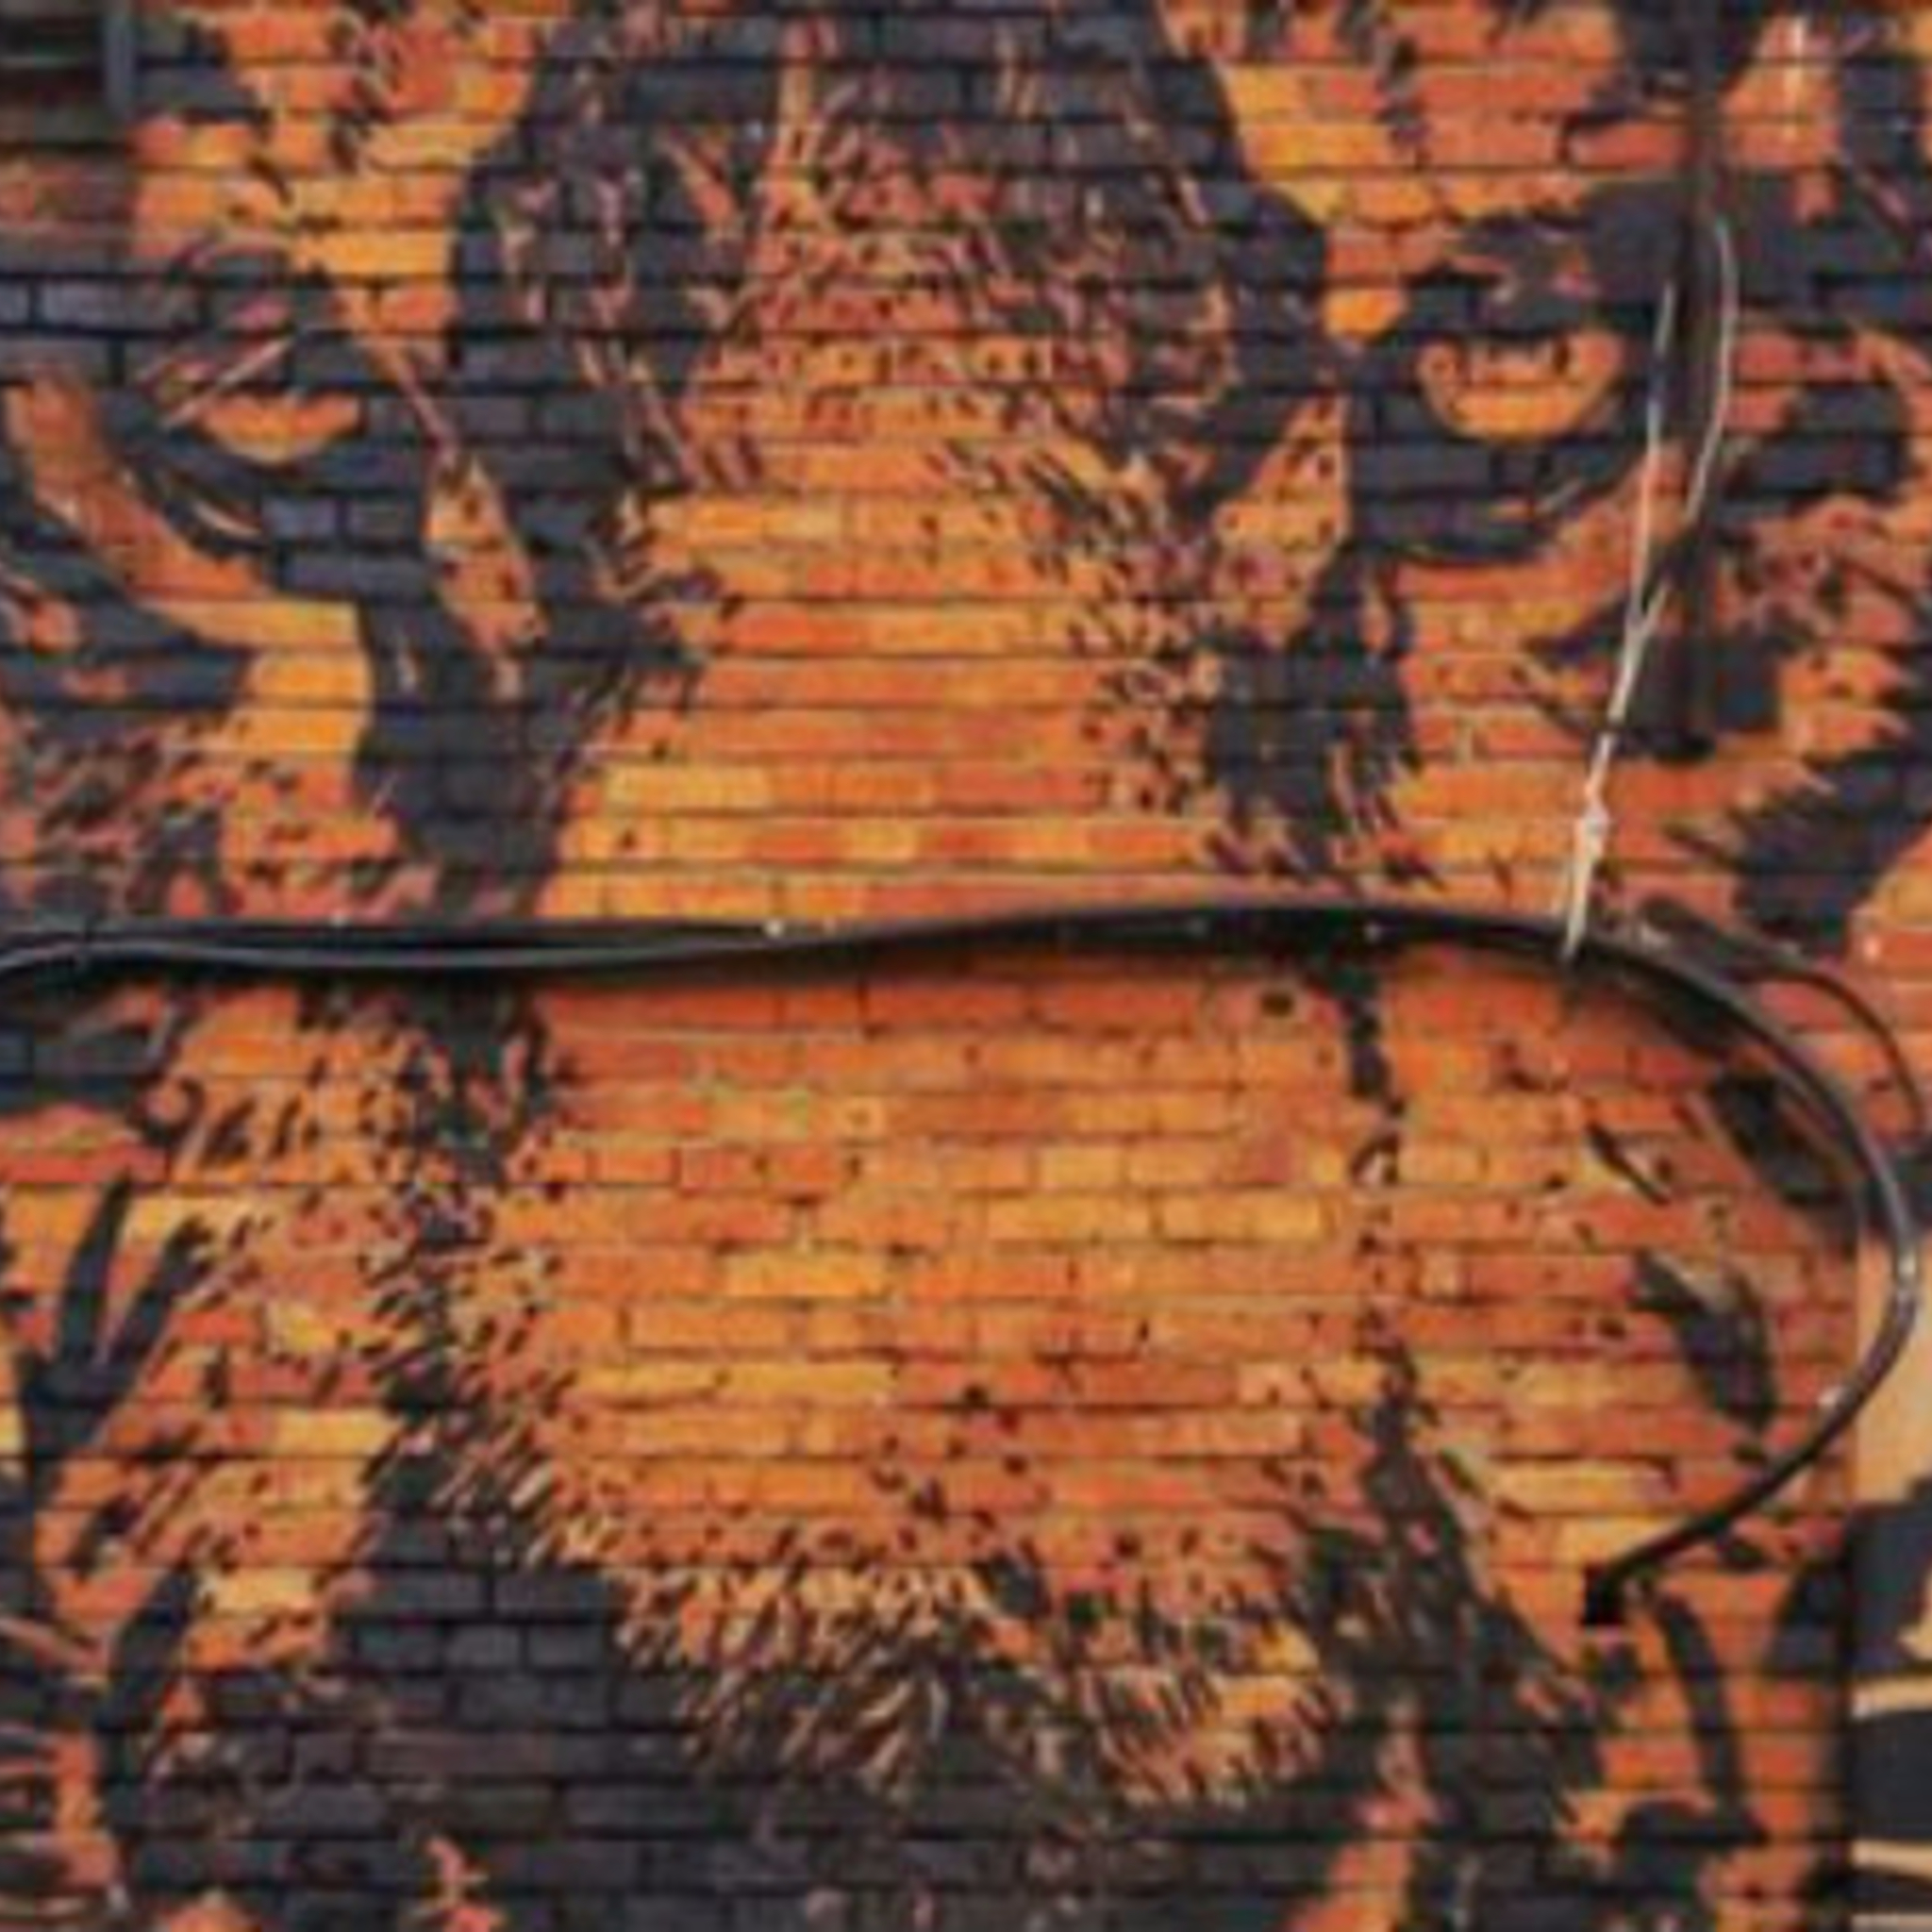 Street art: the wall as a media